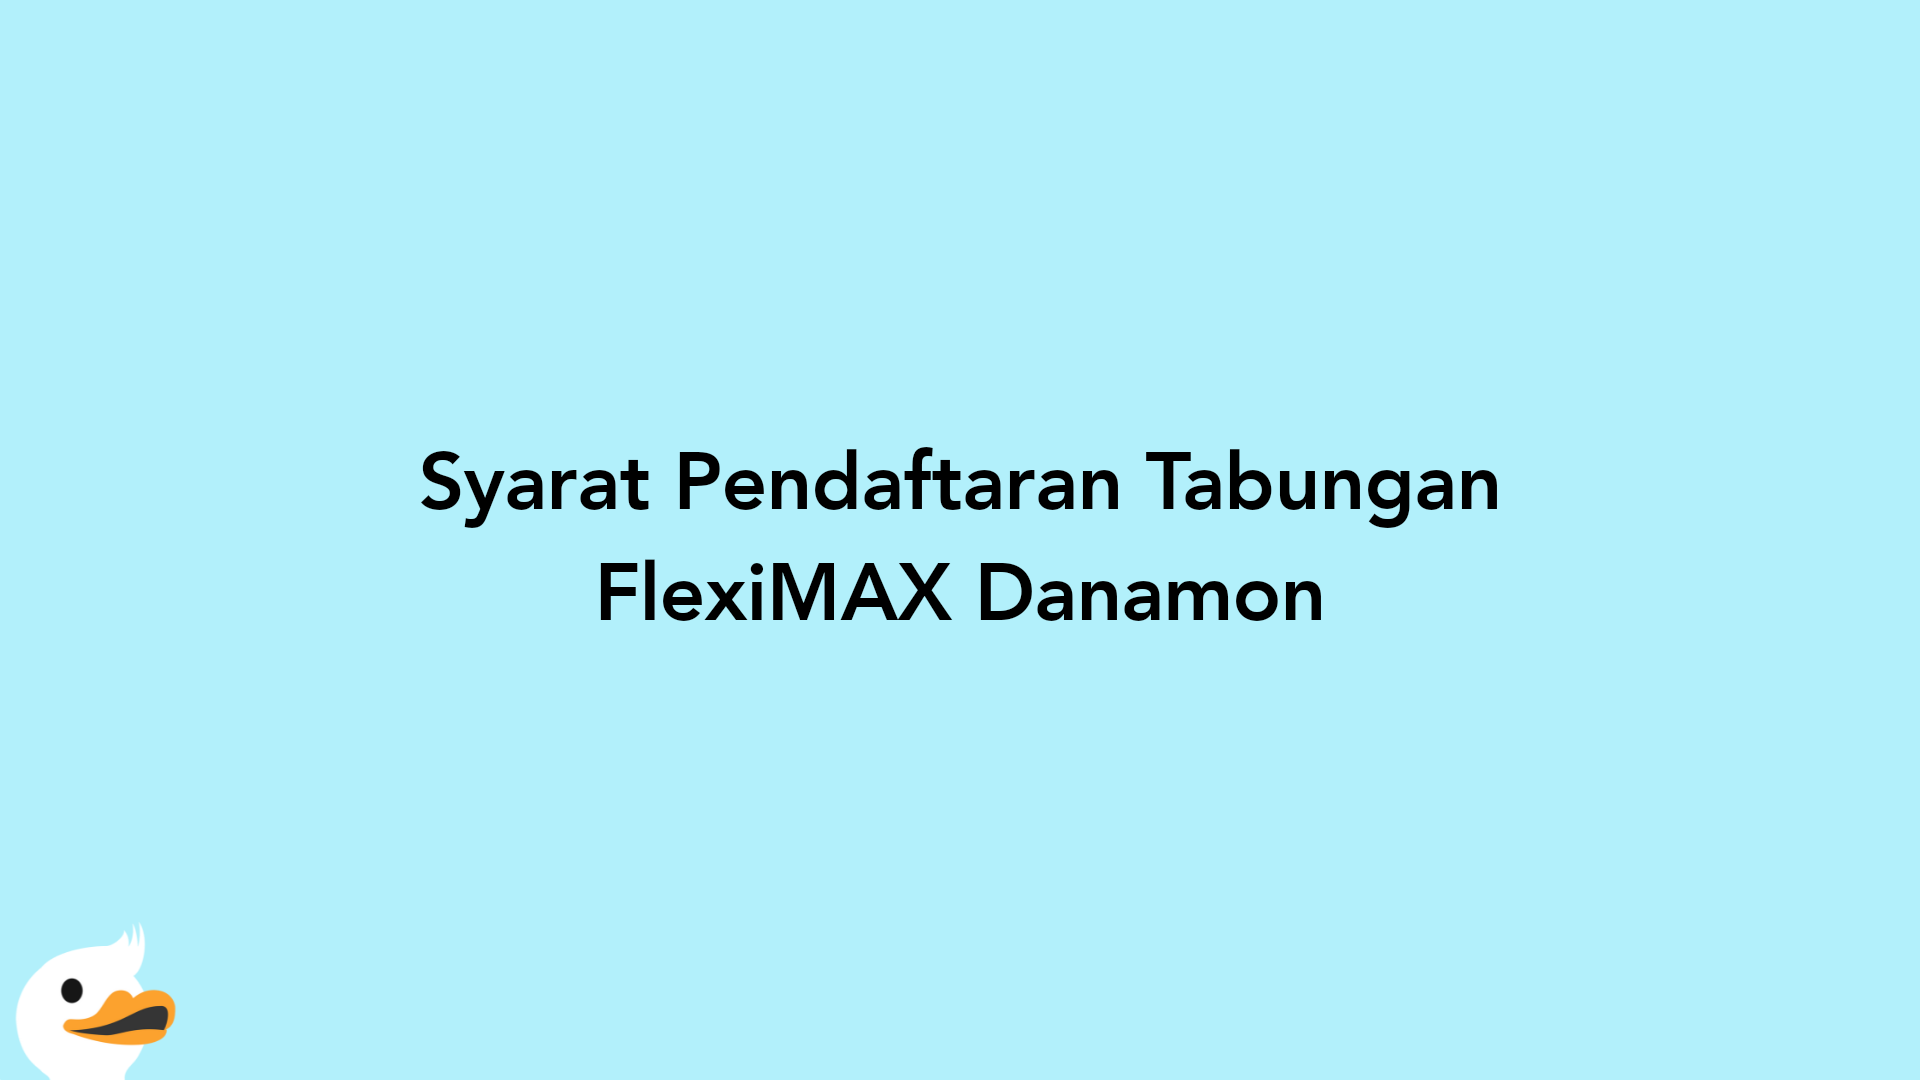 Syarat Pendaftaran Tabungan FlexiMAX Danamon